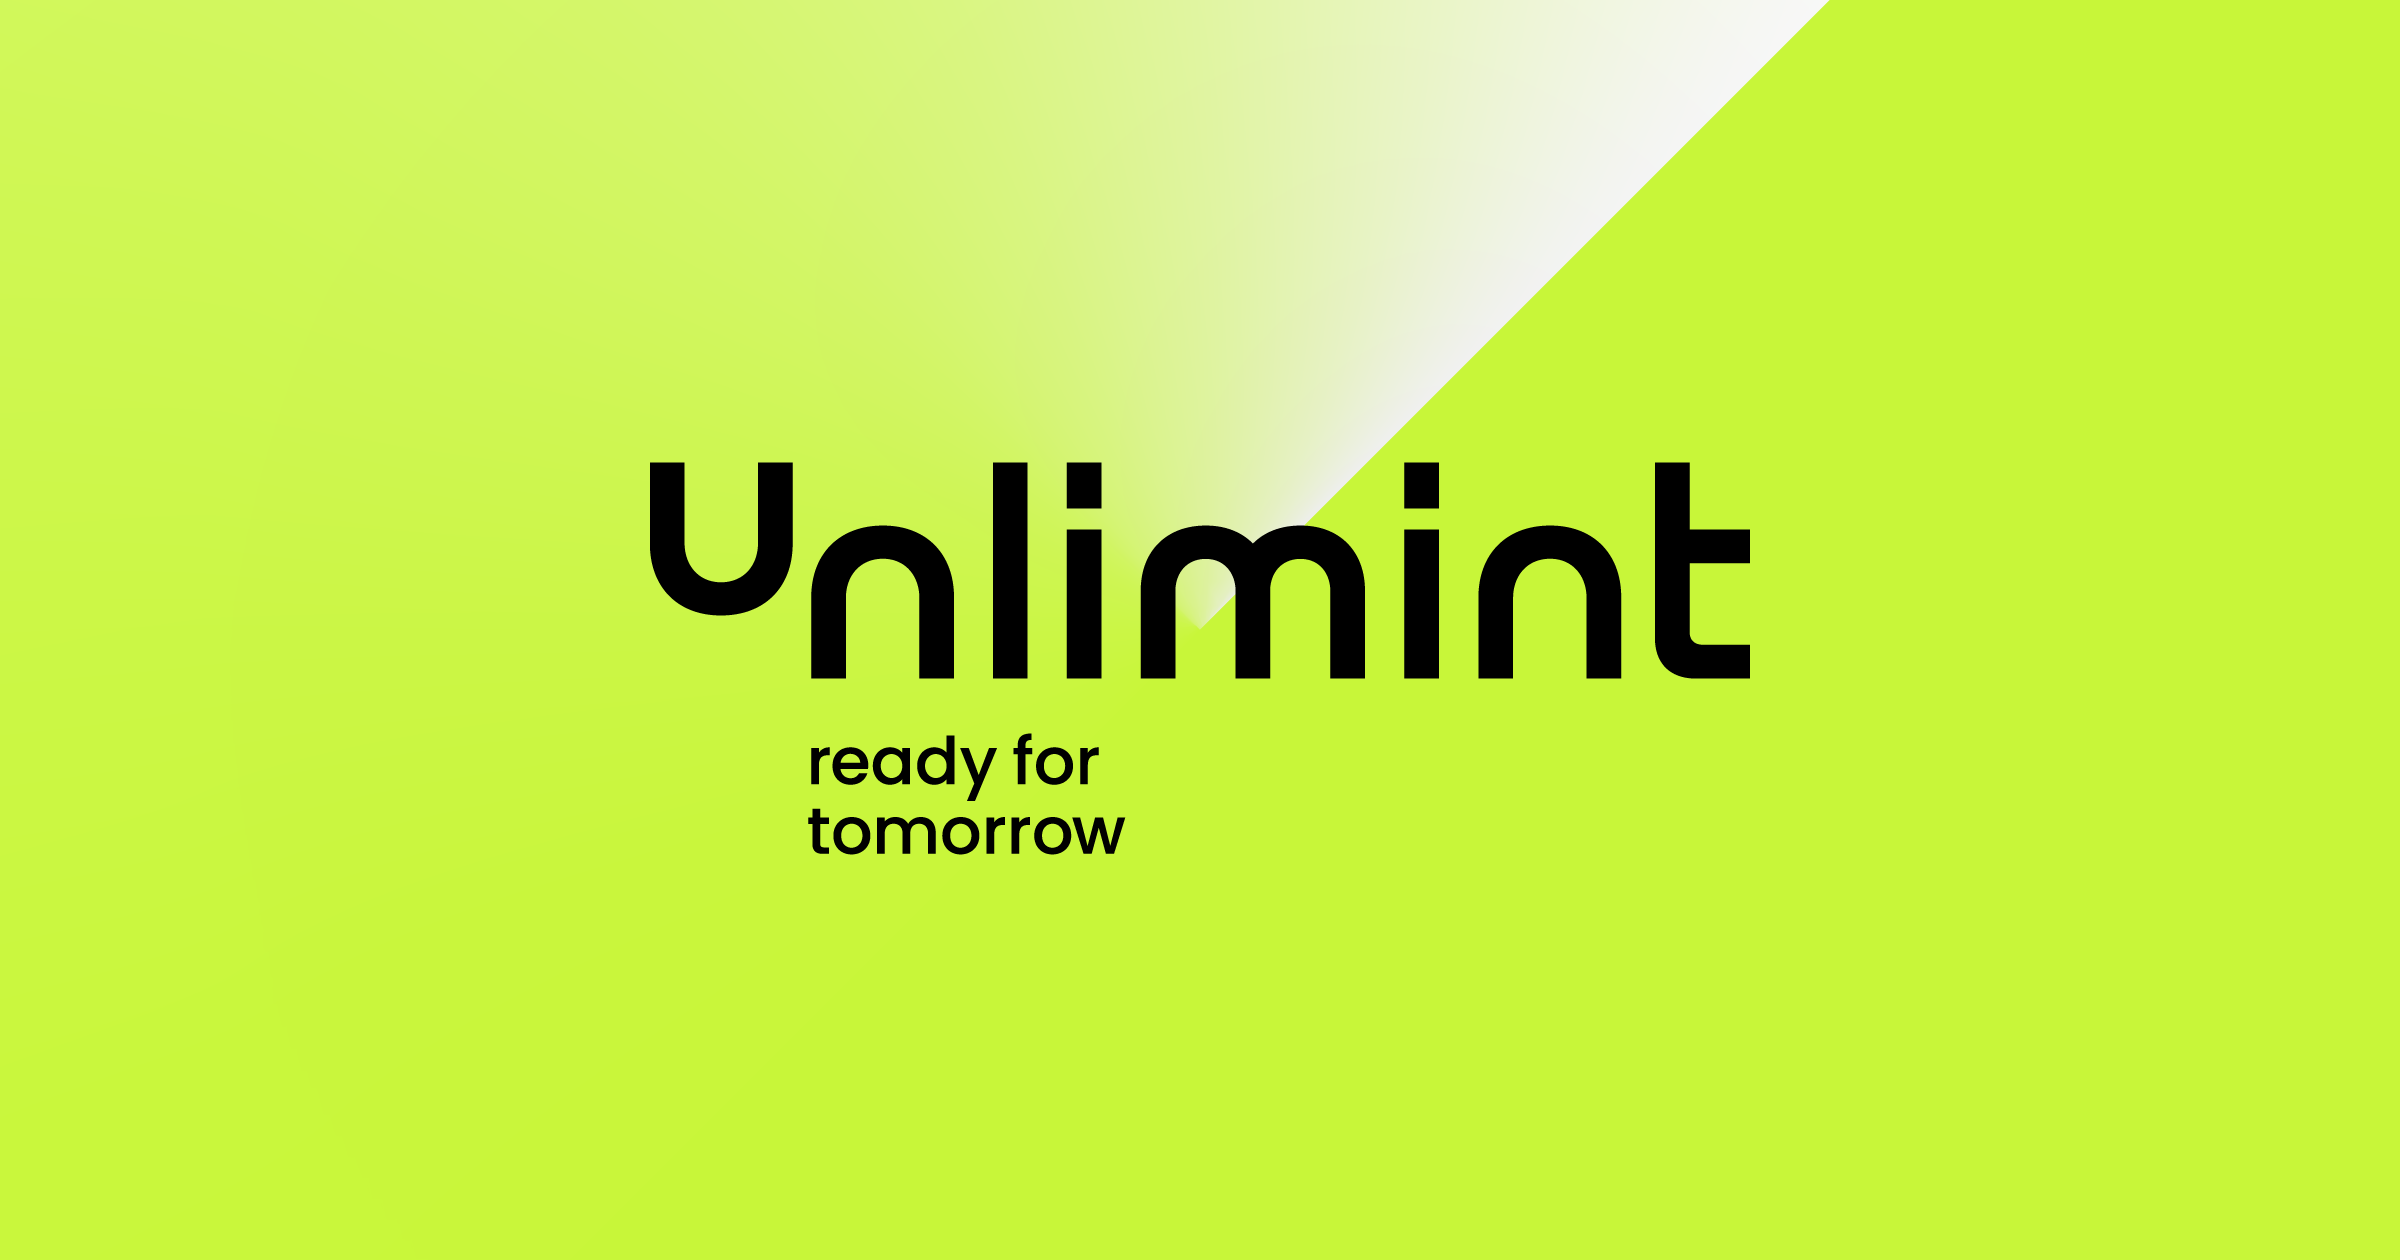 www.unlimint.com